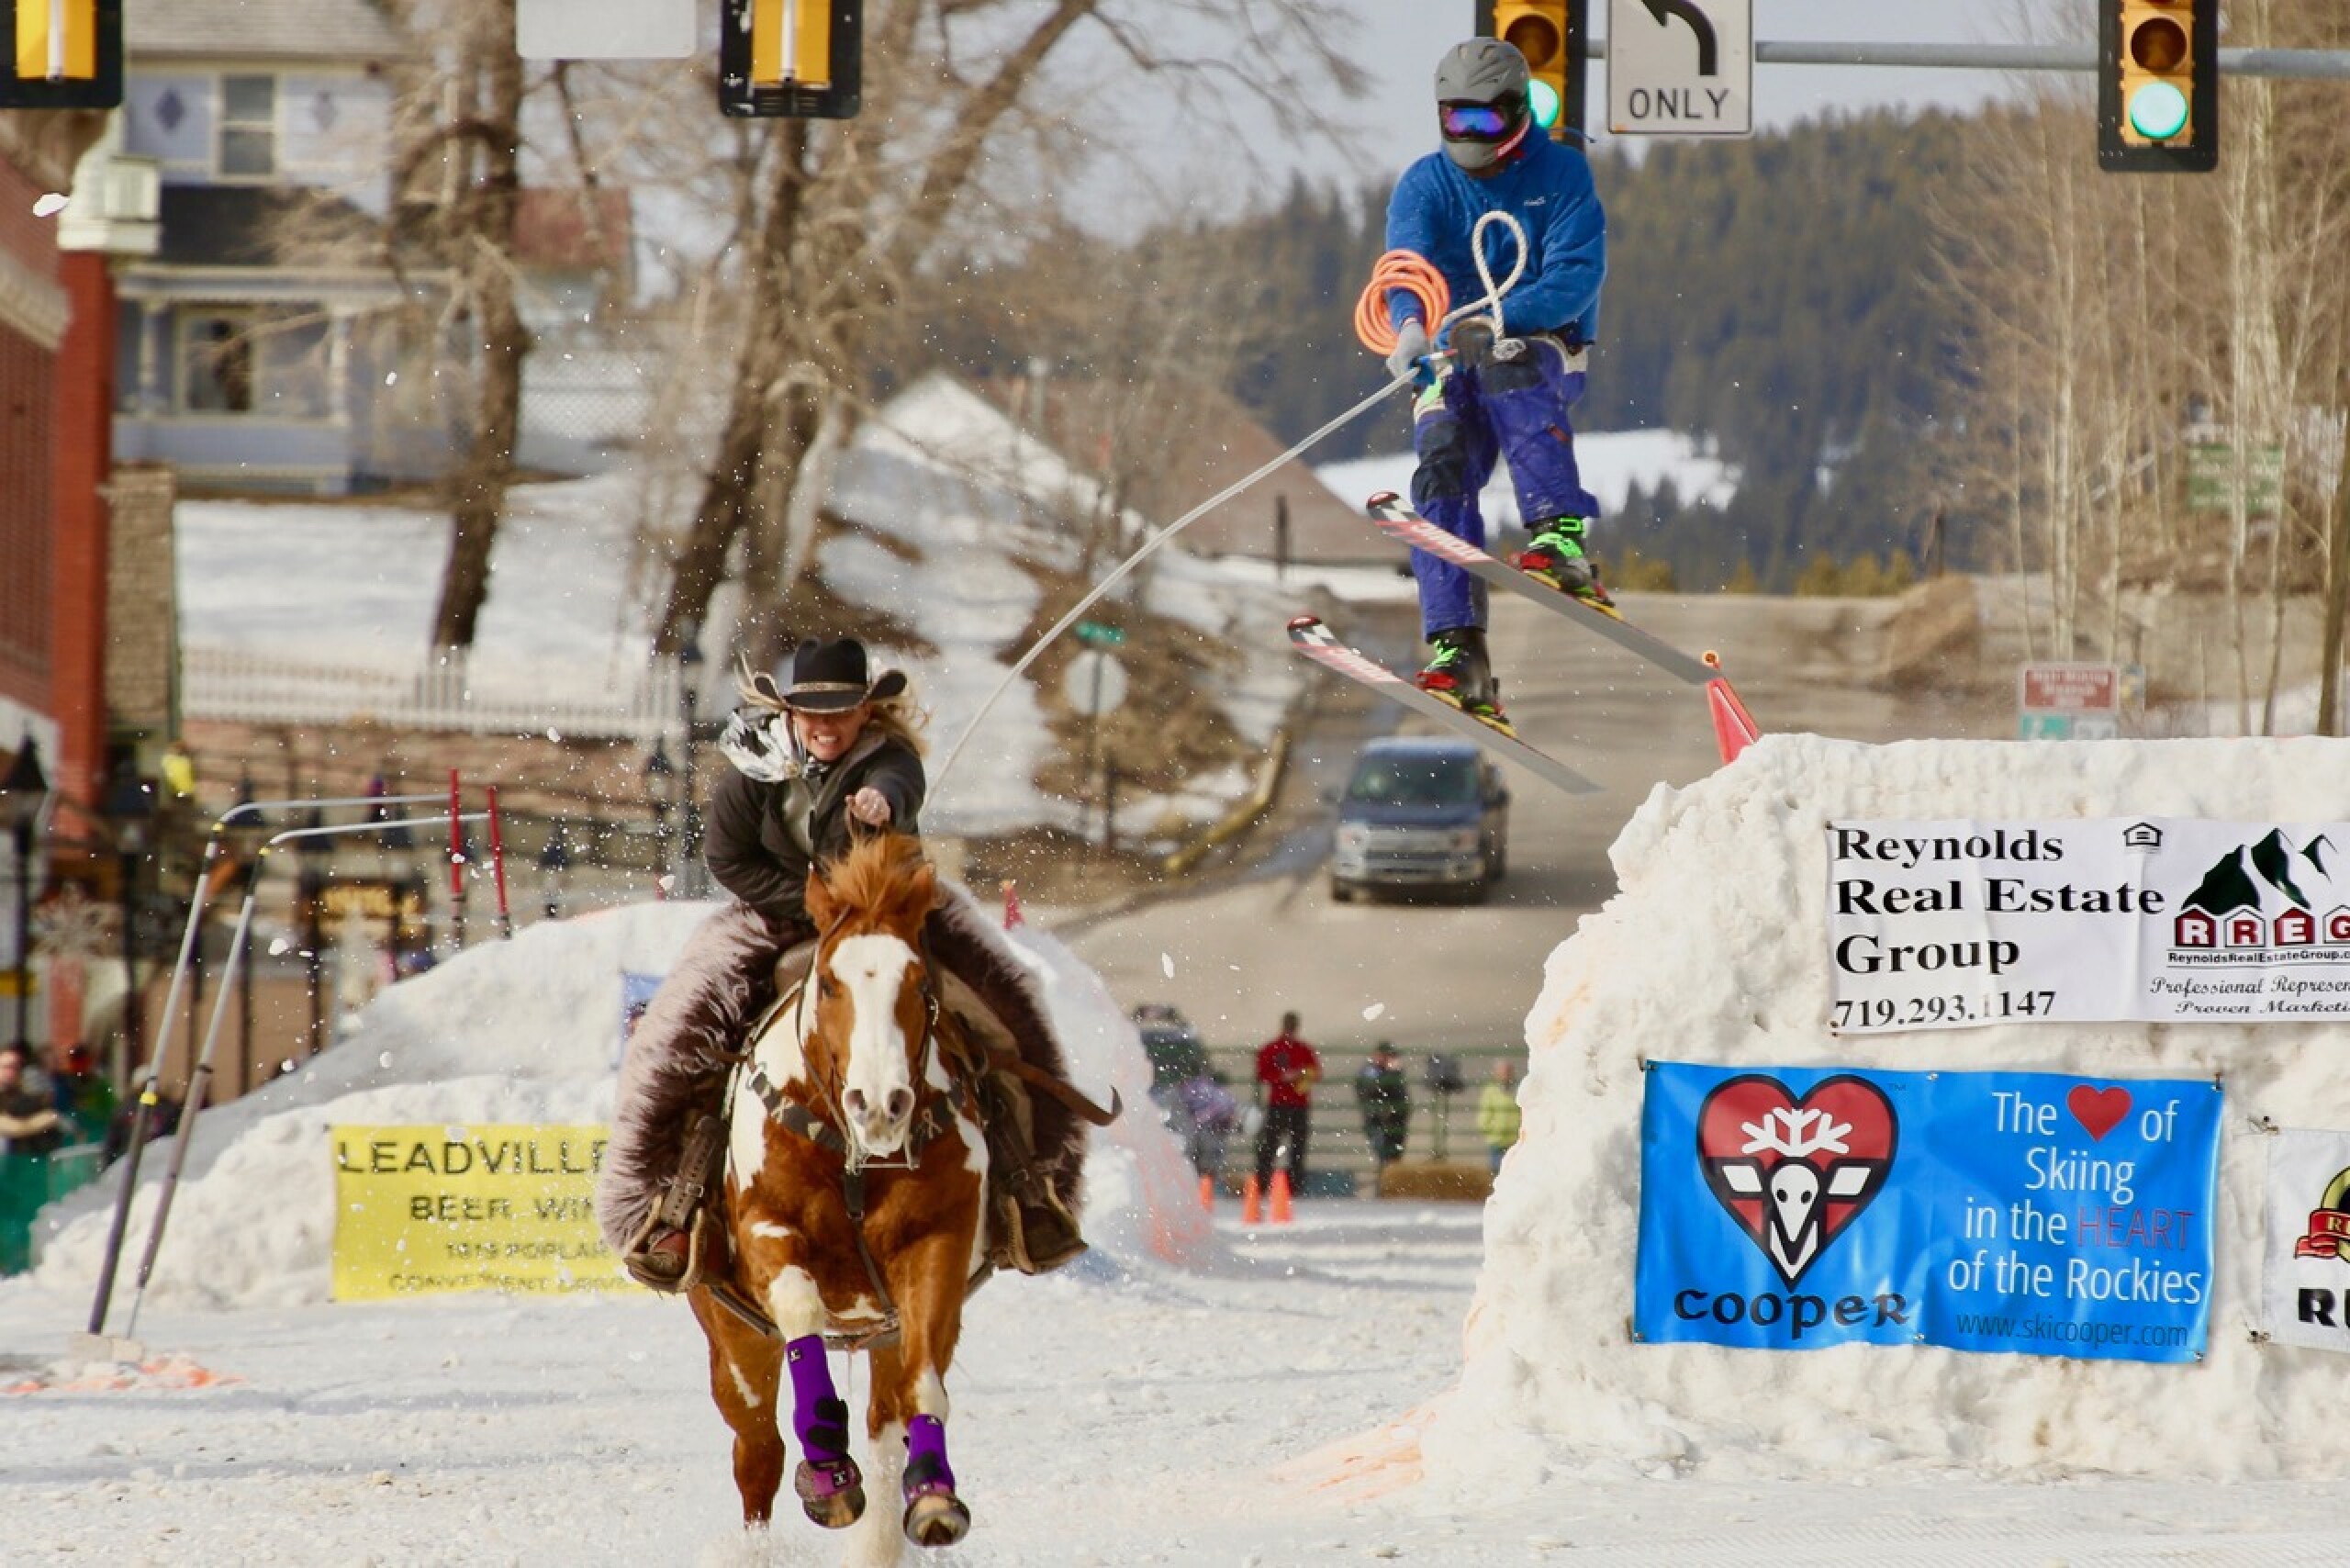 Leadville Colorado Ski Joring: A High-Flying Winter Adventure